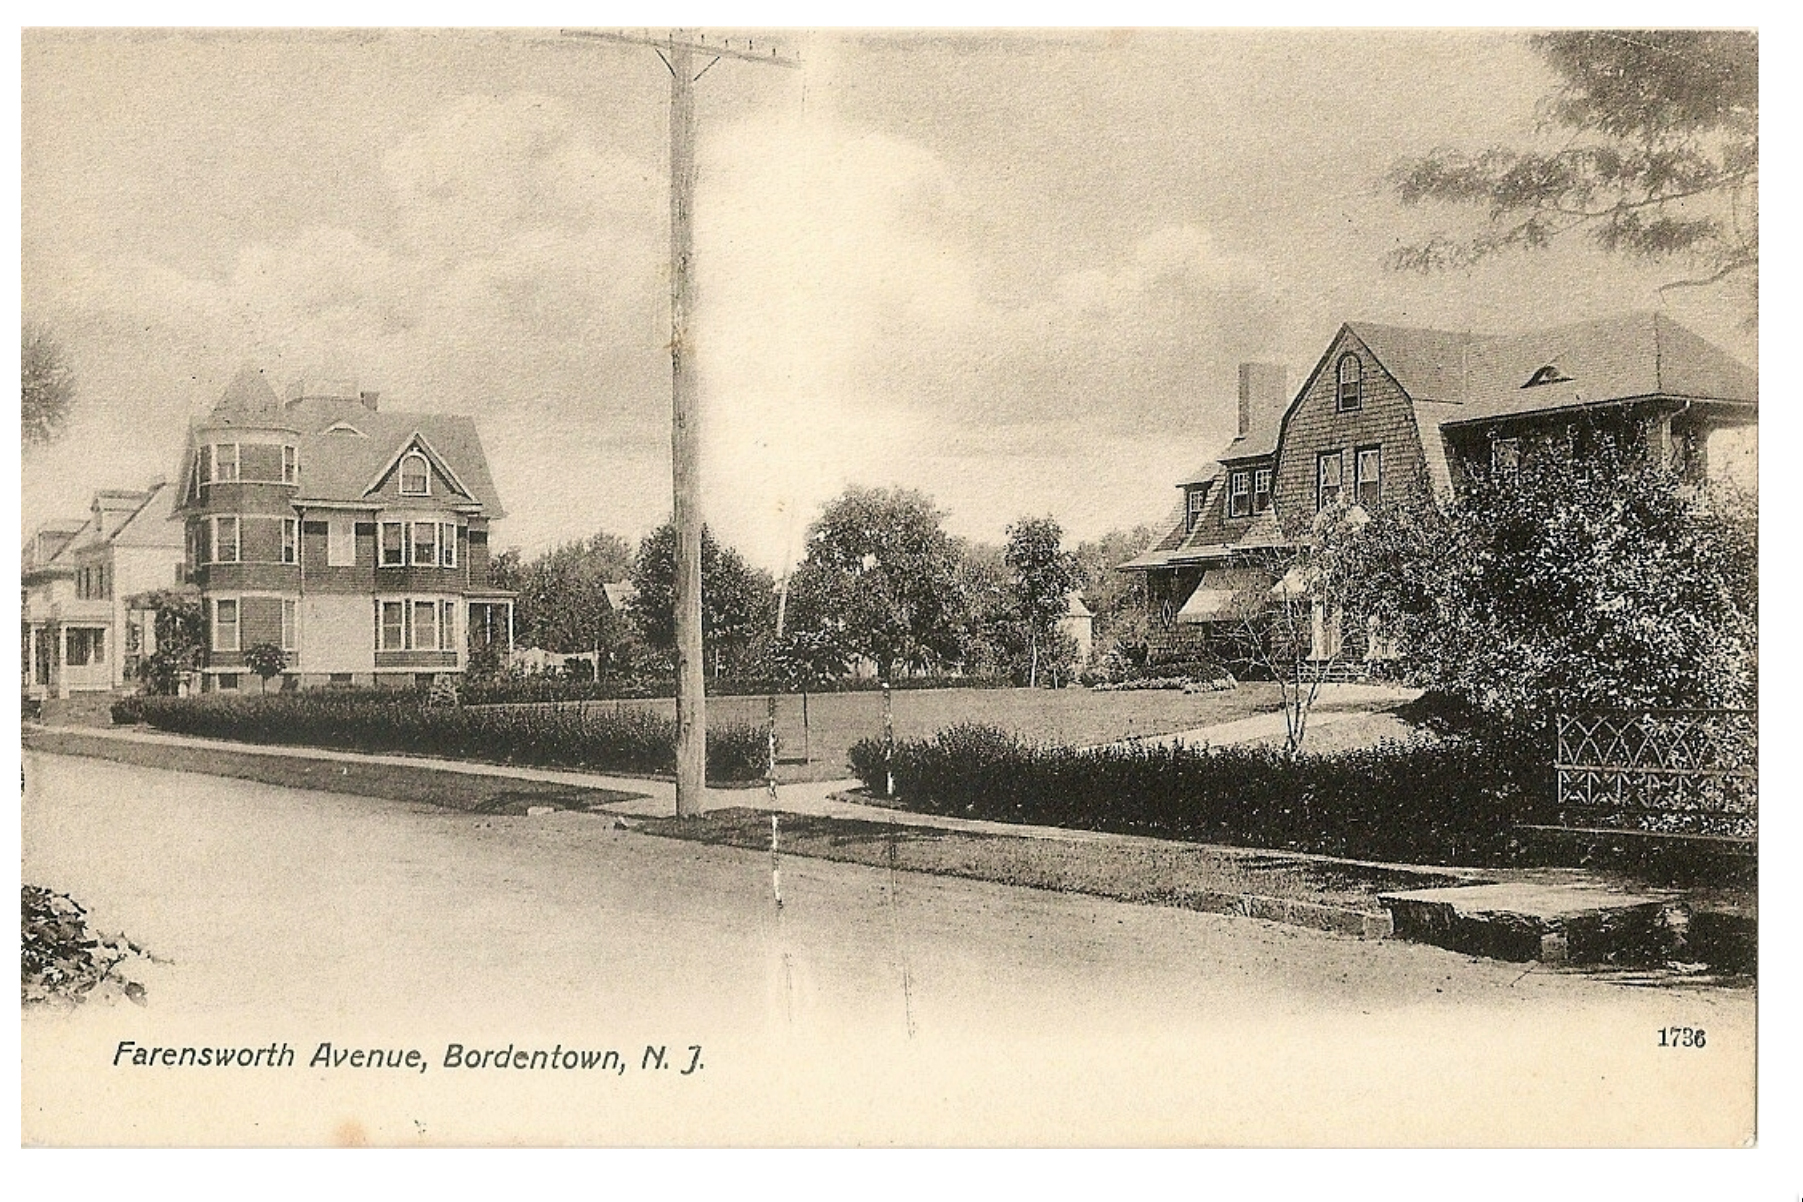 Bordentown - Homes on Farnsworth Avenue - c 1910s